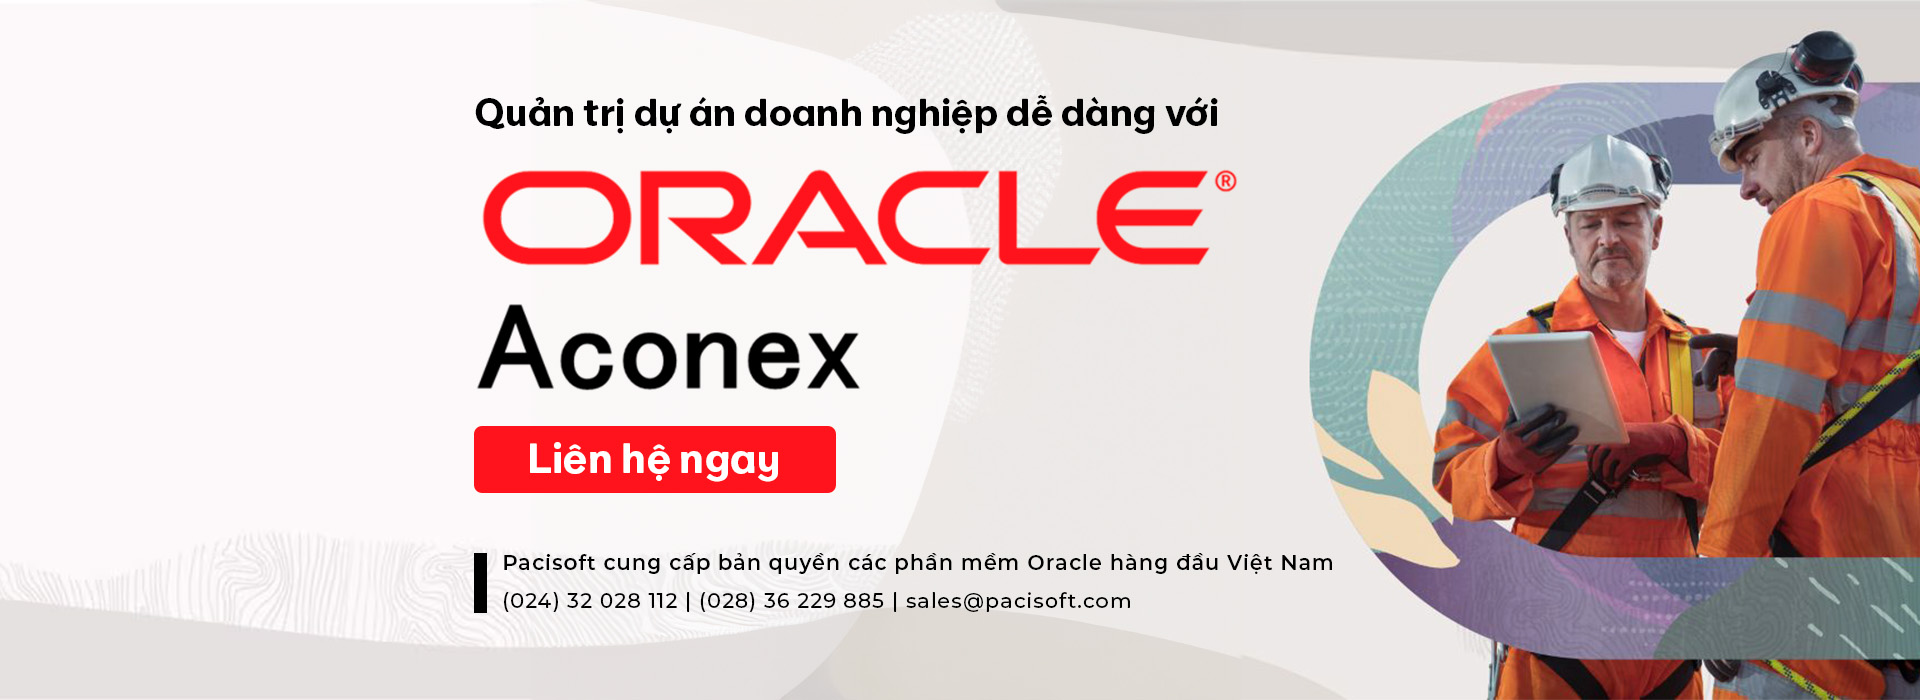 oracle-aconex-banner